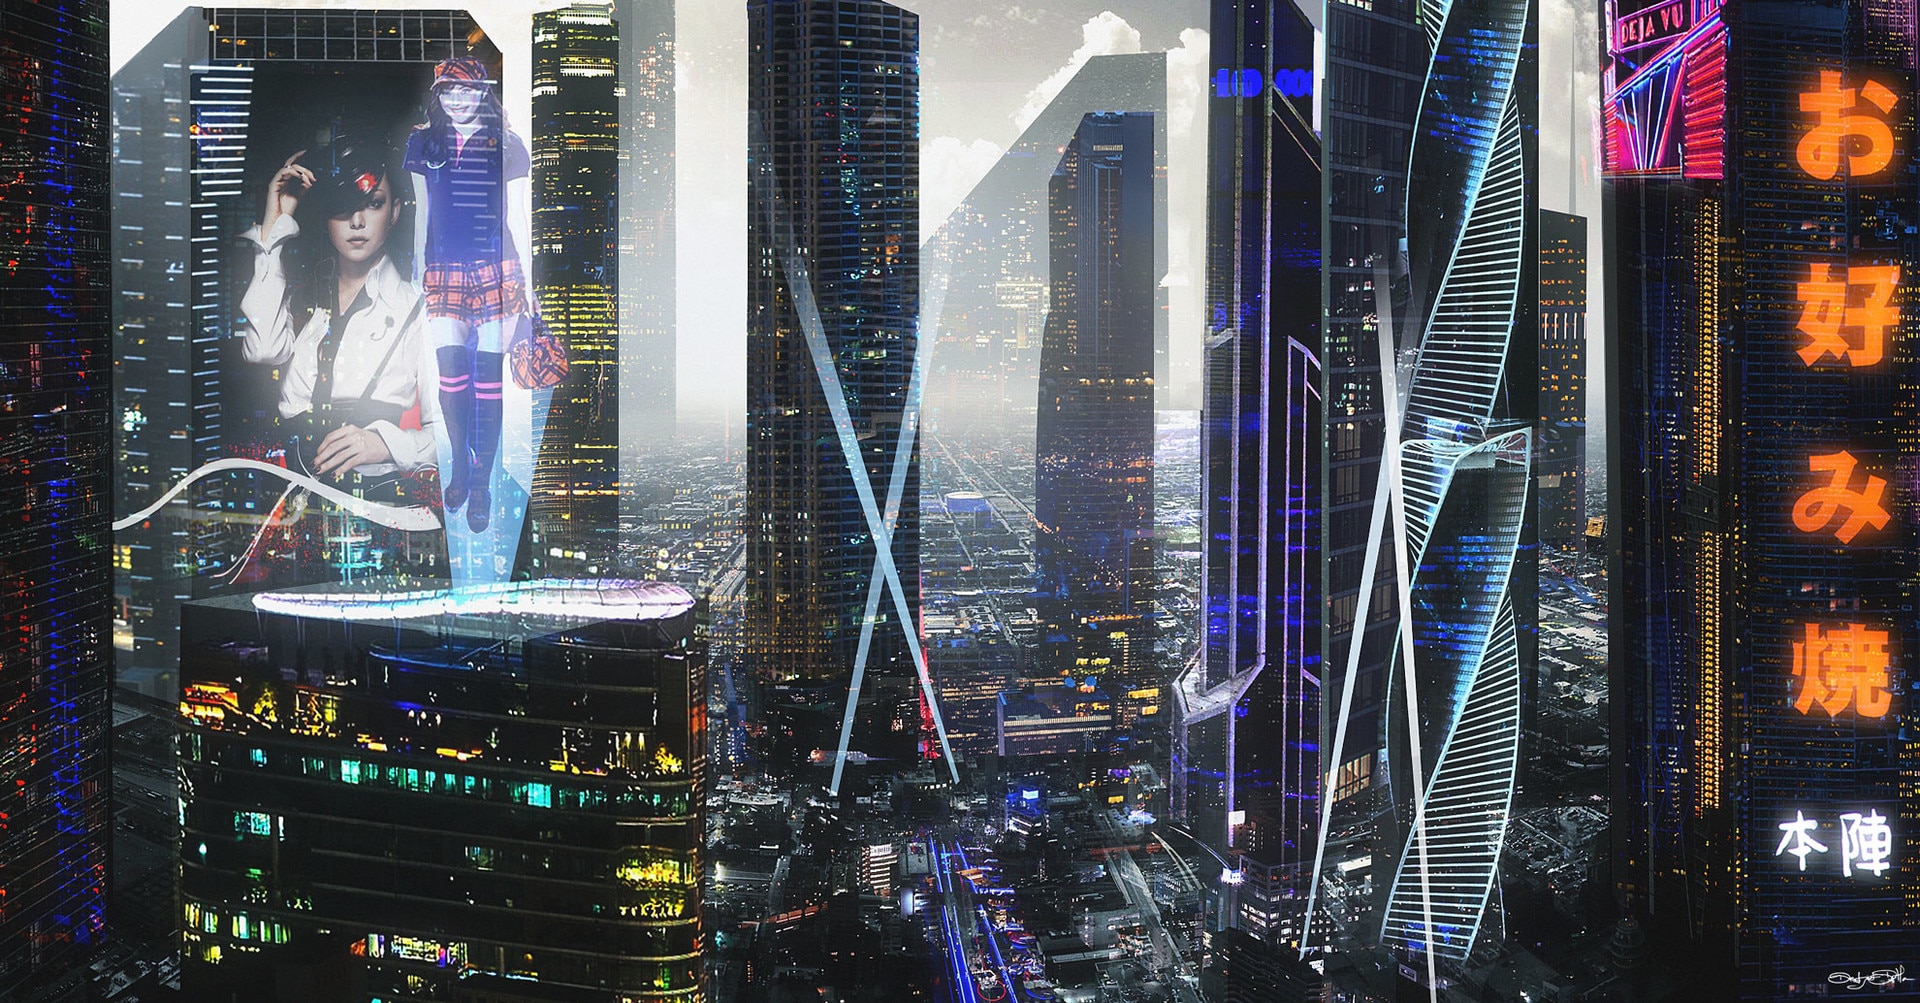 Las vegas monorail. background is a bright cyberpunk city skyline